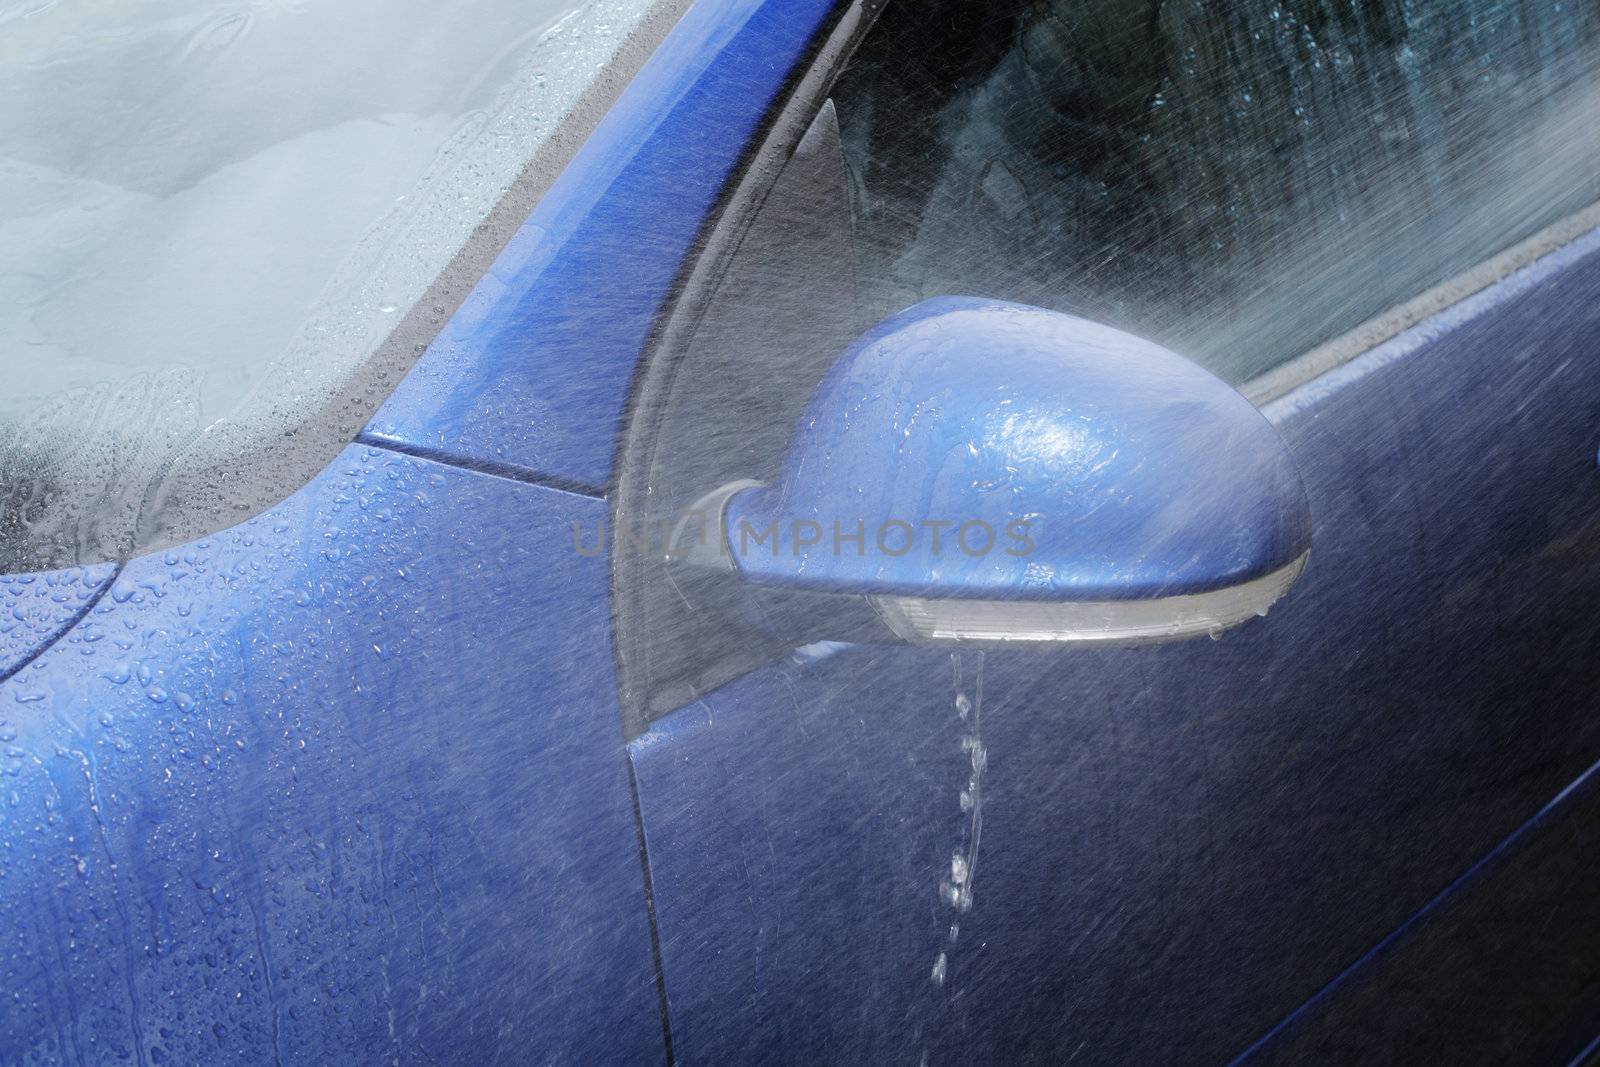 Spraying water on a blue car